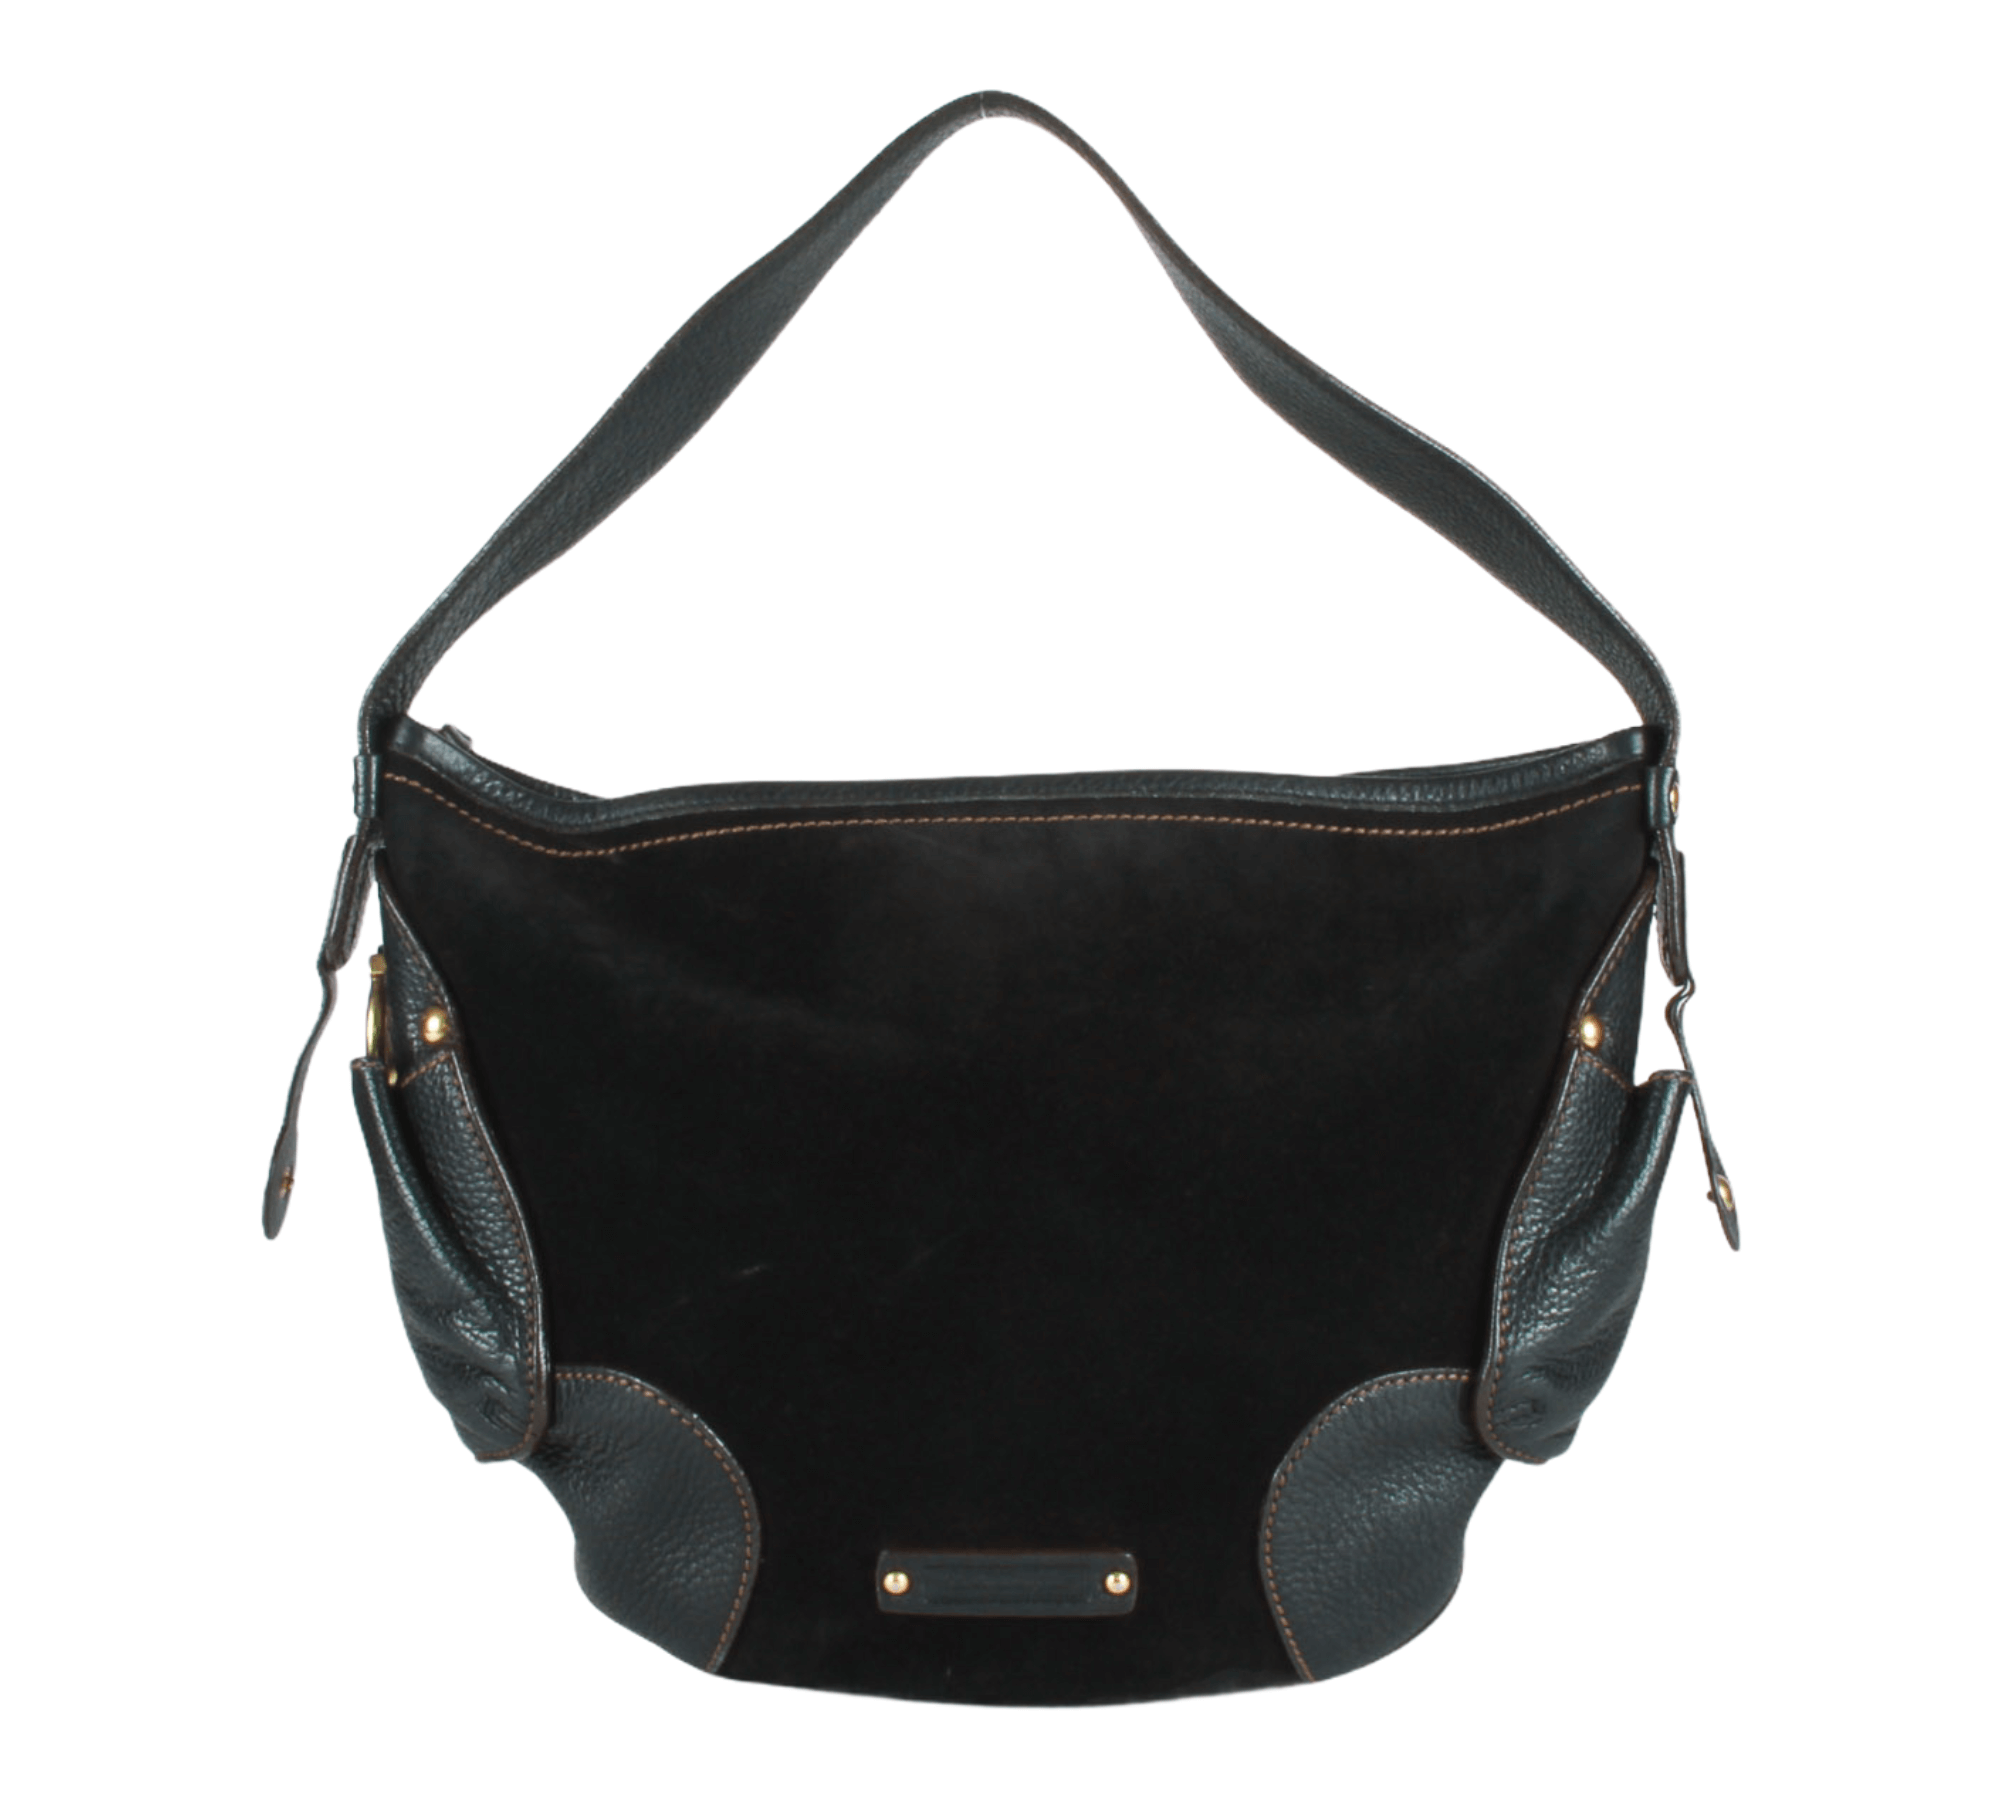 Authentic Salvatore Ferragamo black suede & leather shoulder bag